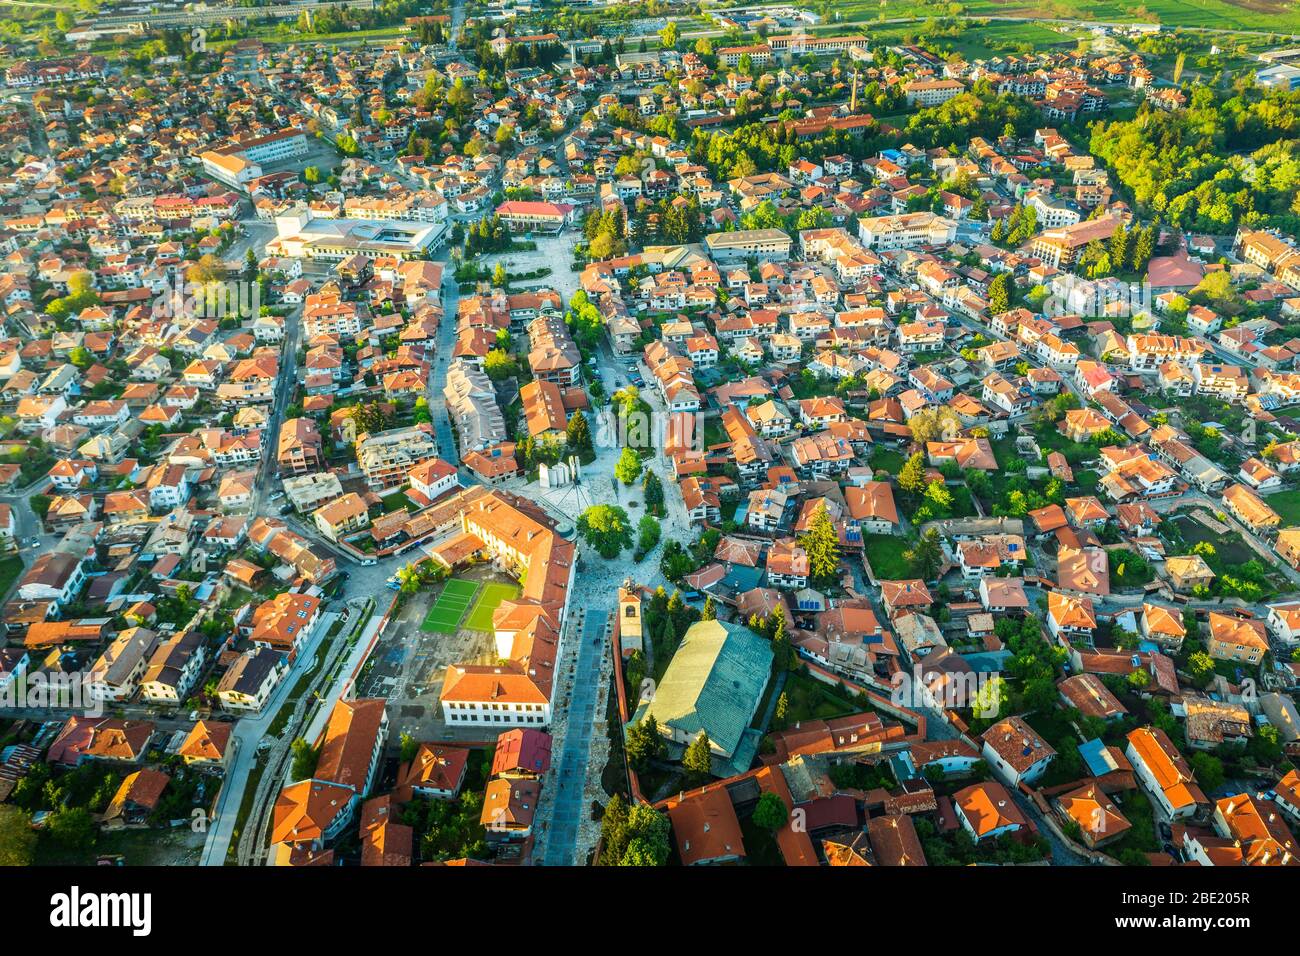 Europe, Bulgaria, Bansko, aerial view of Bansko old town Stock Photo